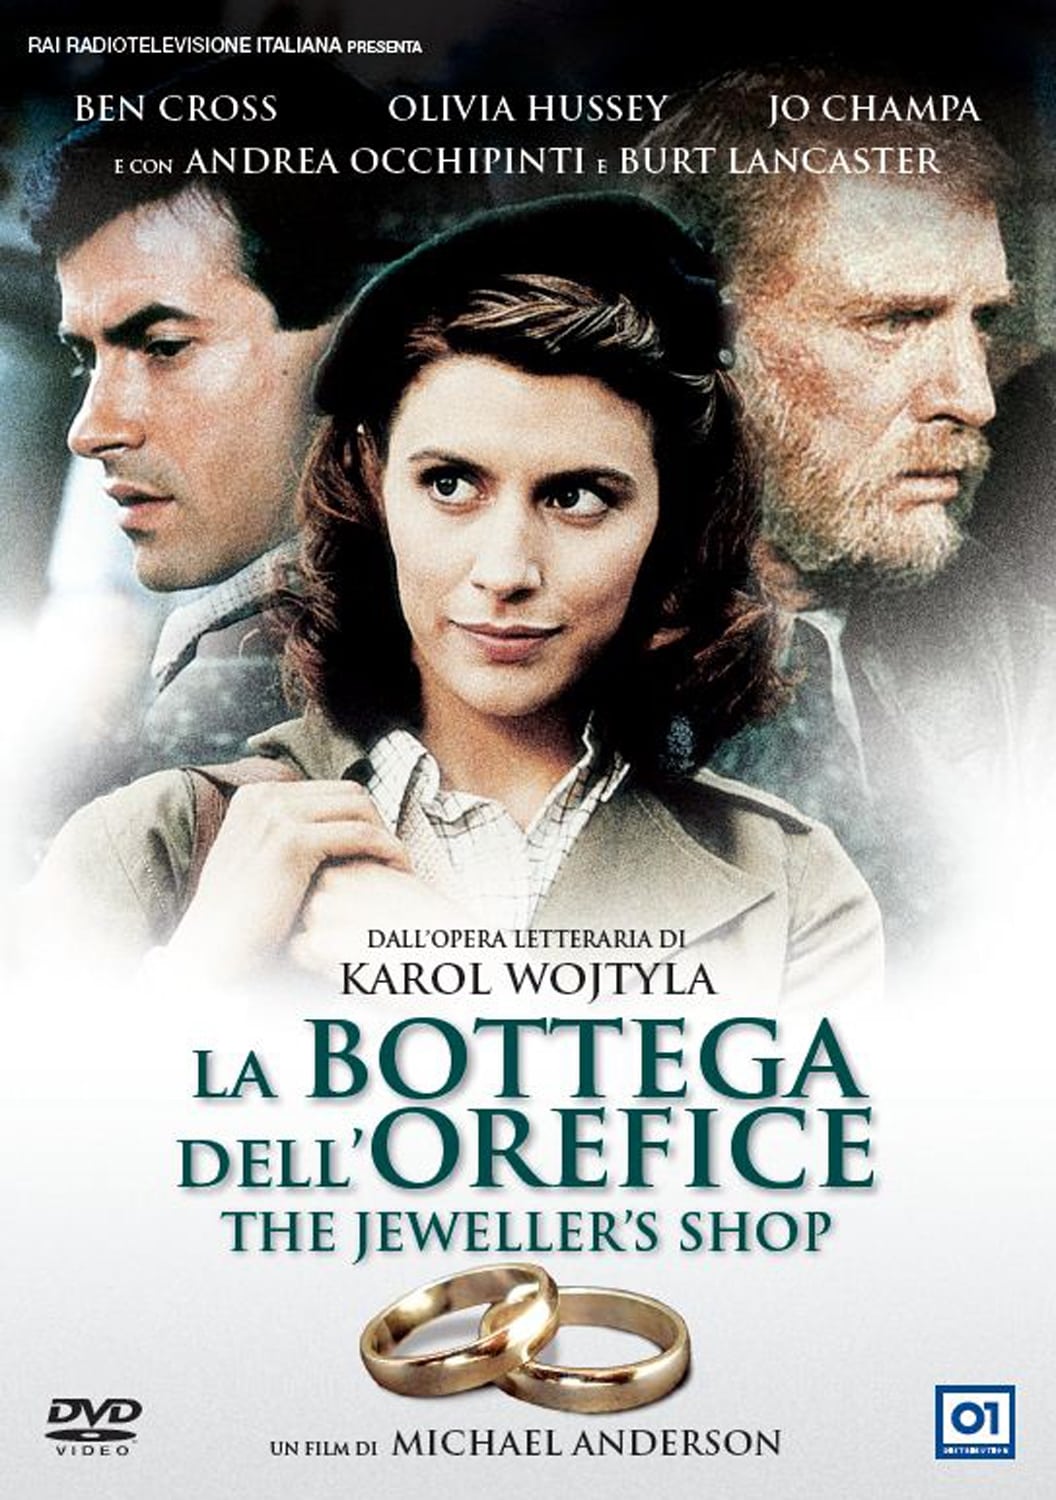 The Jeweller's Shop (1989)